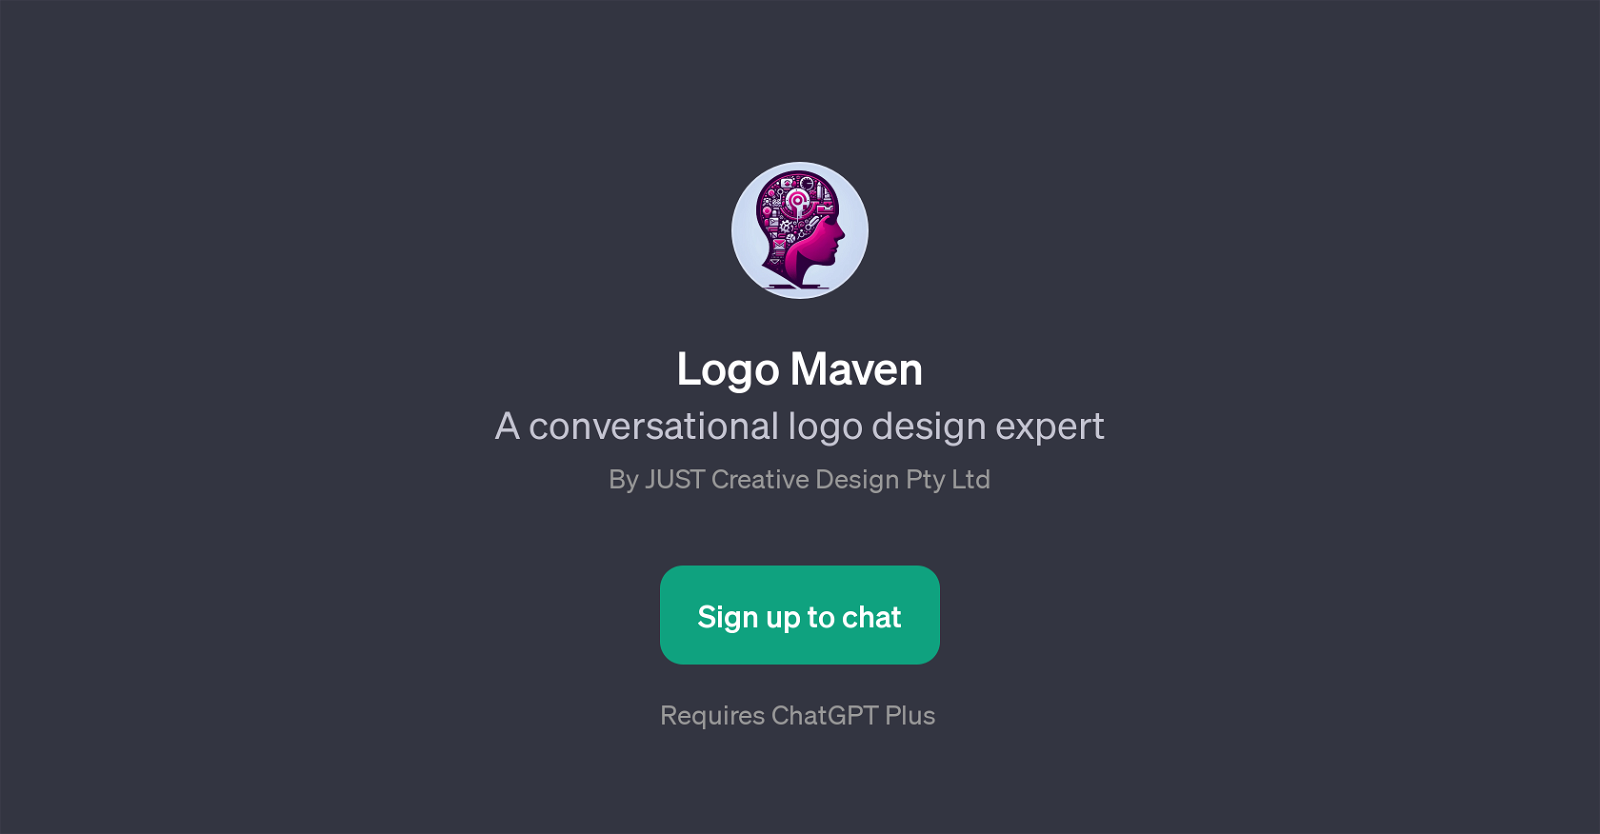 Logo Maven website